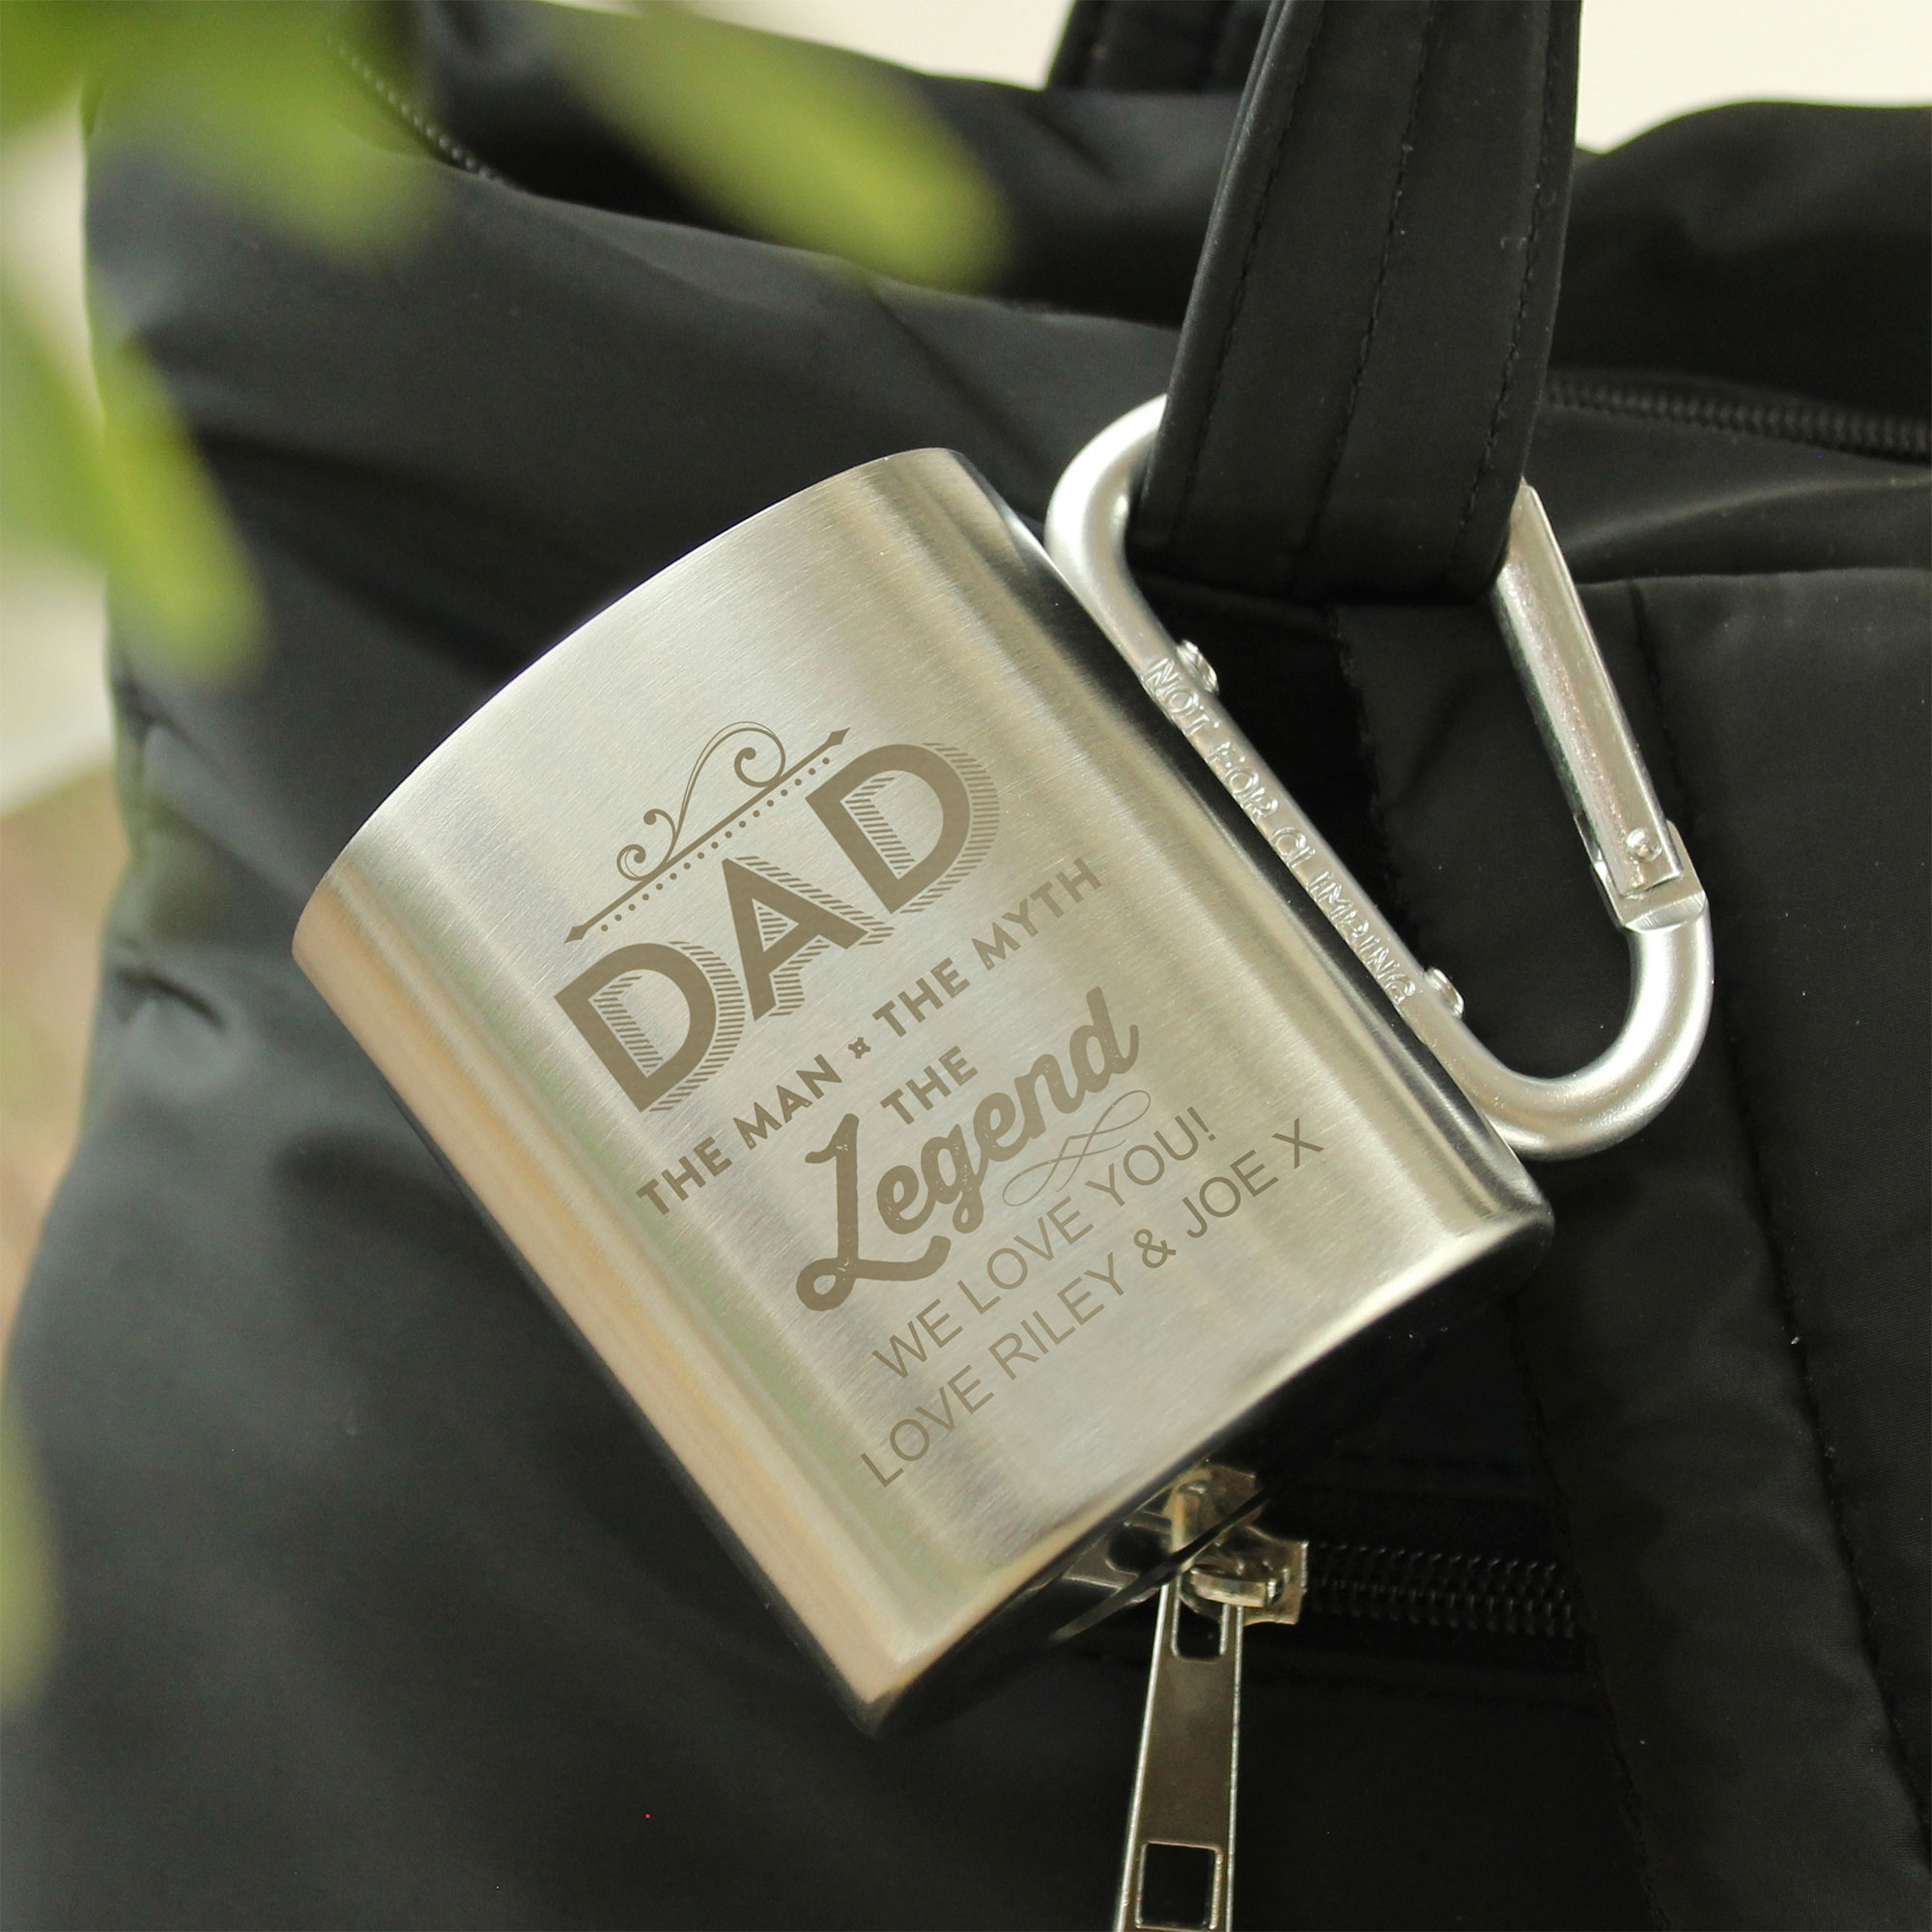 Personalised Steel Mug - Dad The Legend